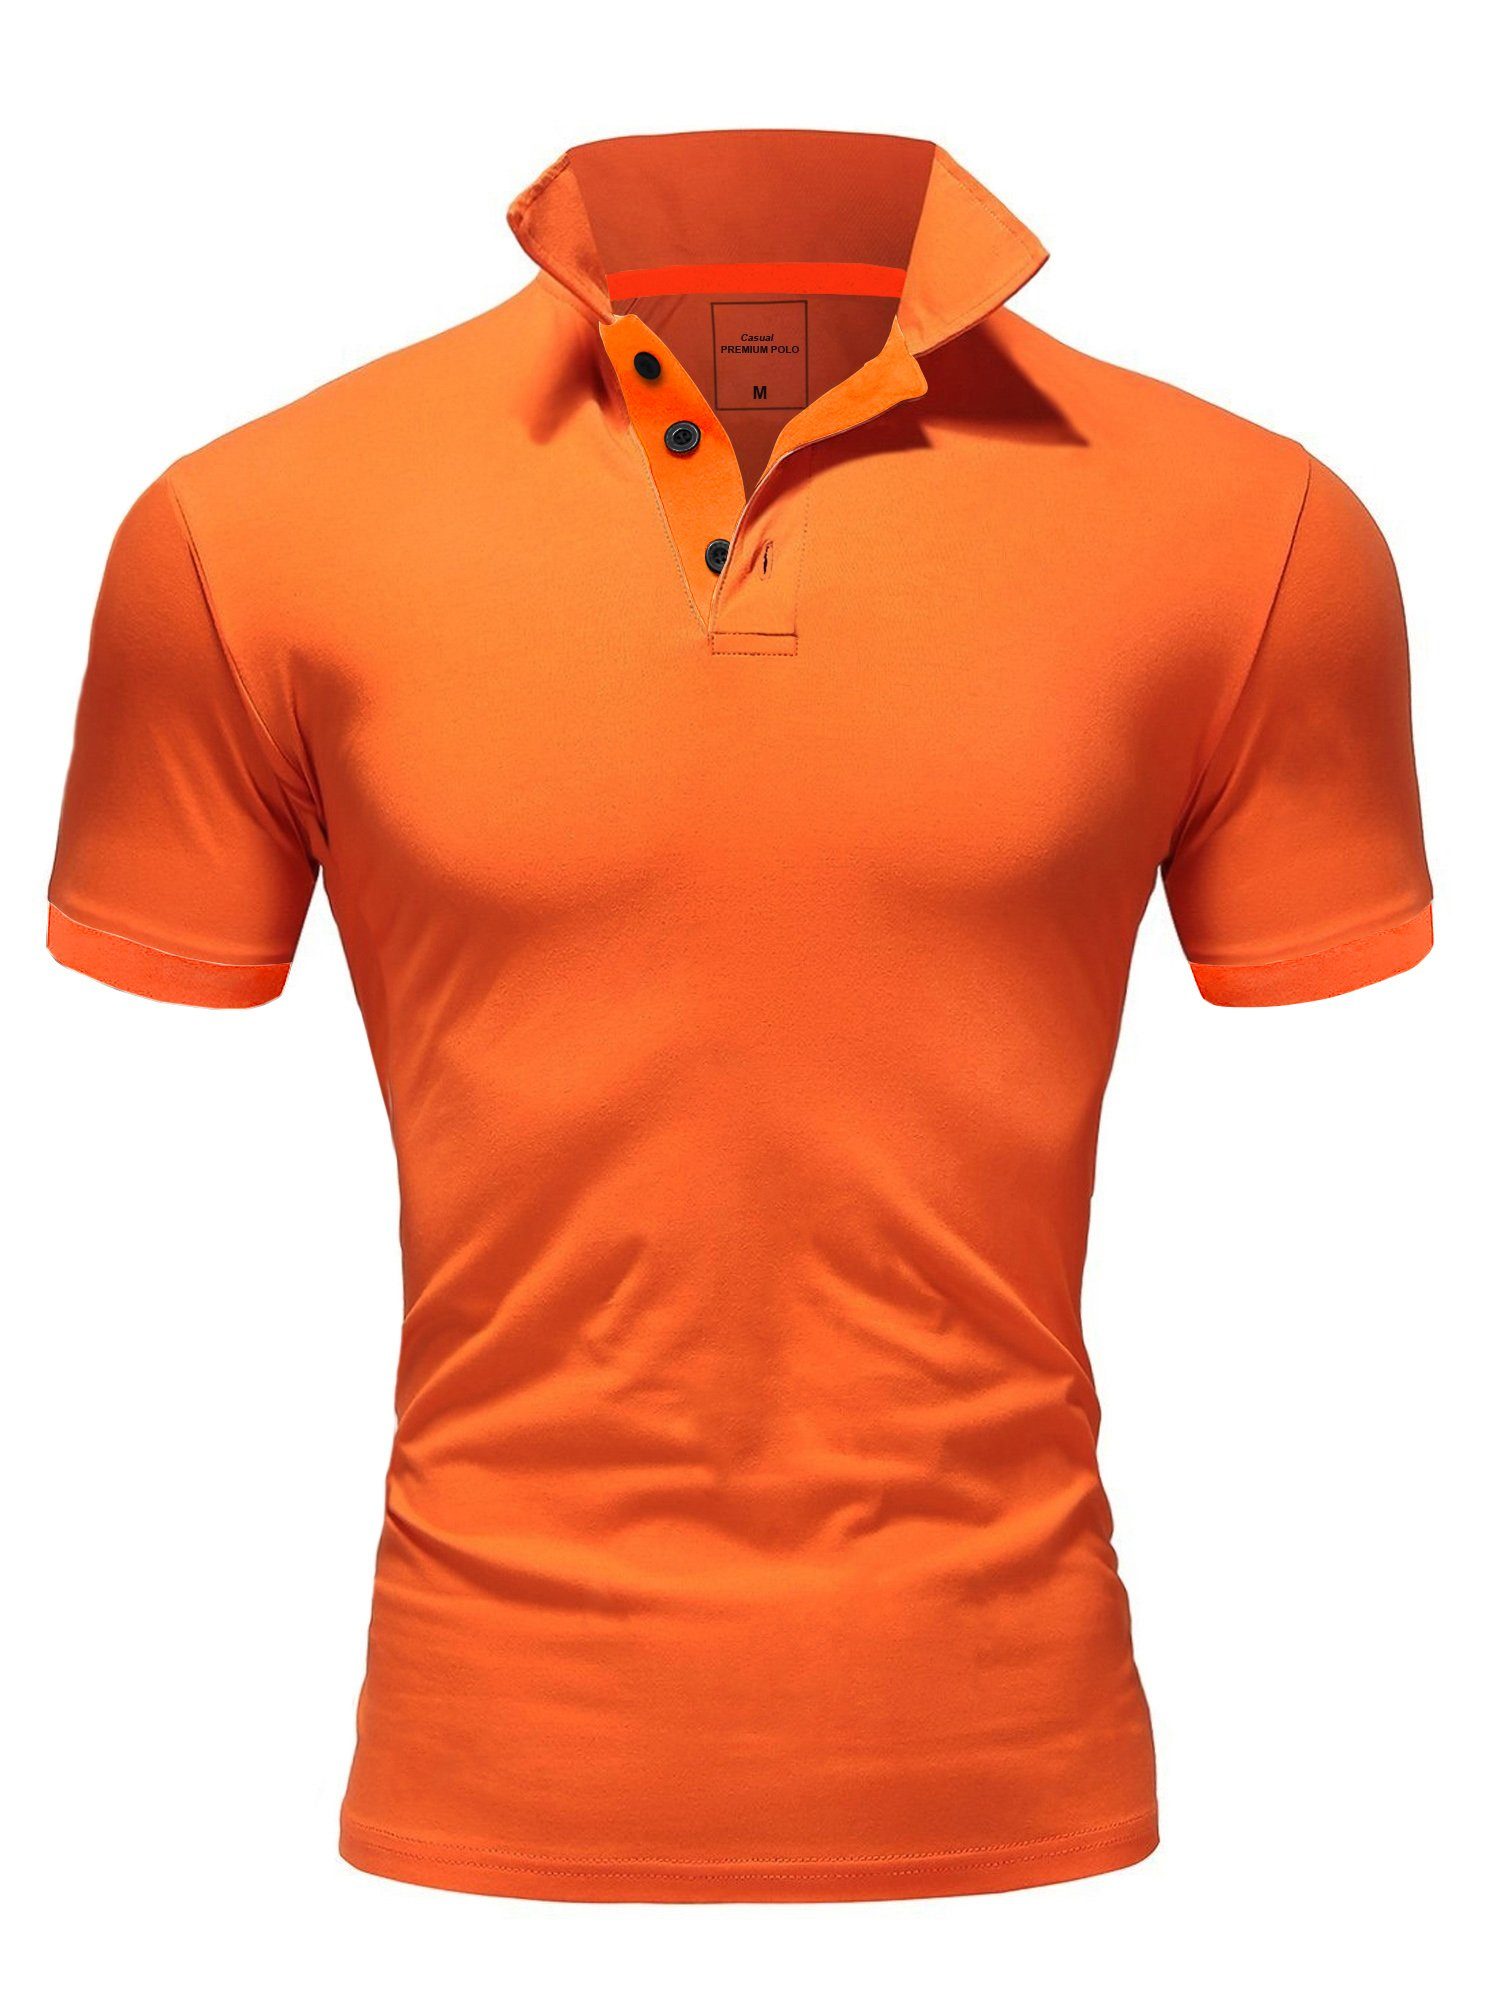 Kurzarm Poloshirt MAINE Amaci&Sons Orange Basic Poloshirt